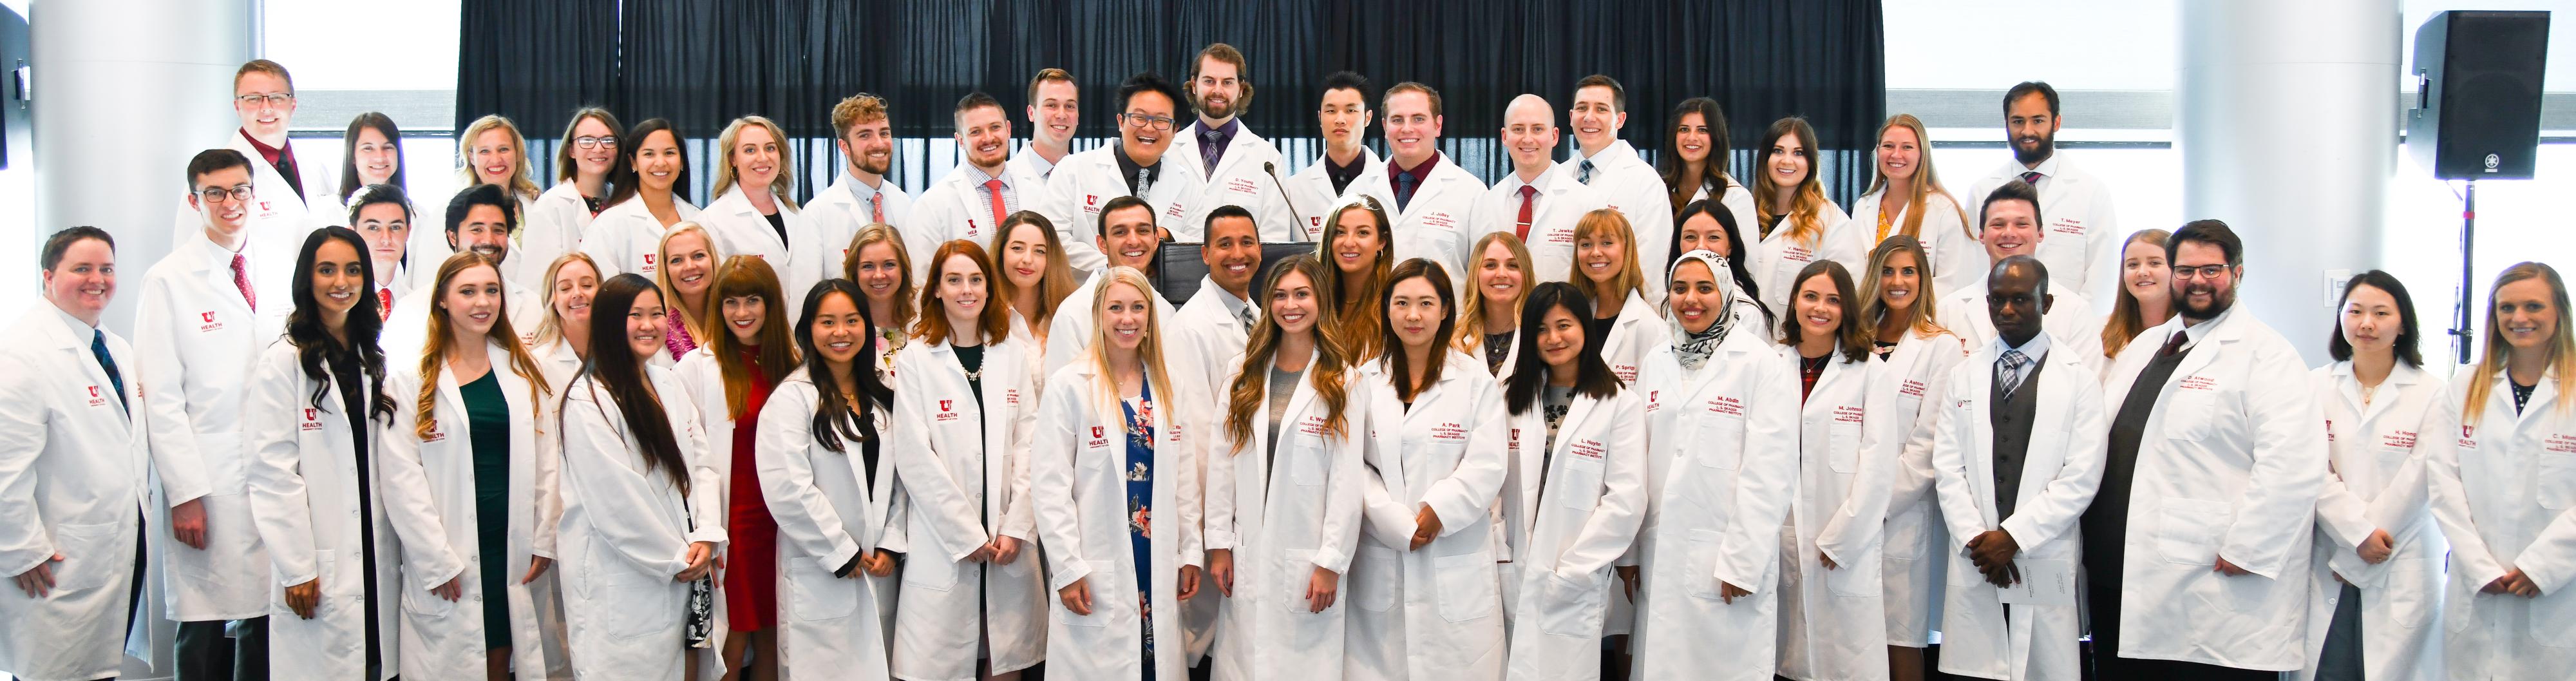 Class of 2023 White Coat Ceremony College of Pharmacy University of